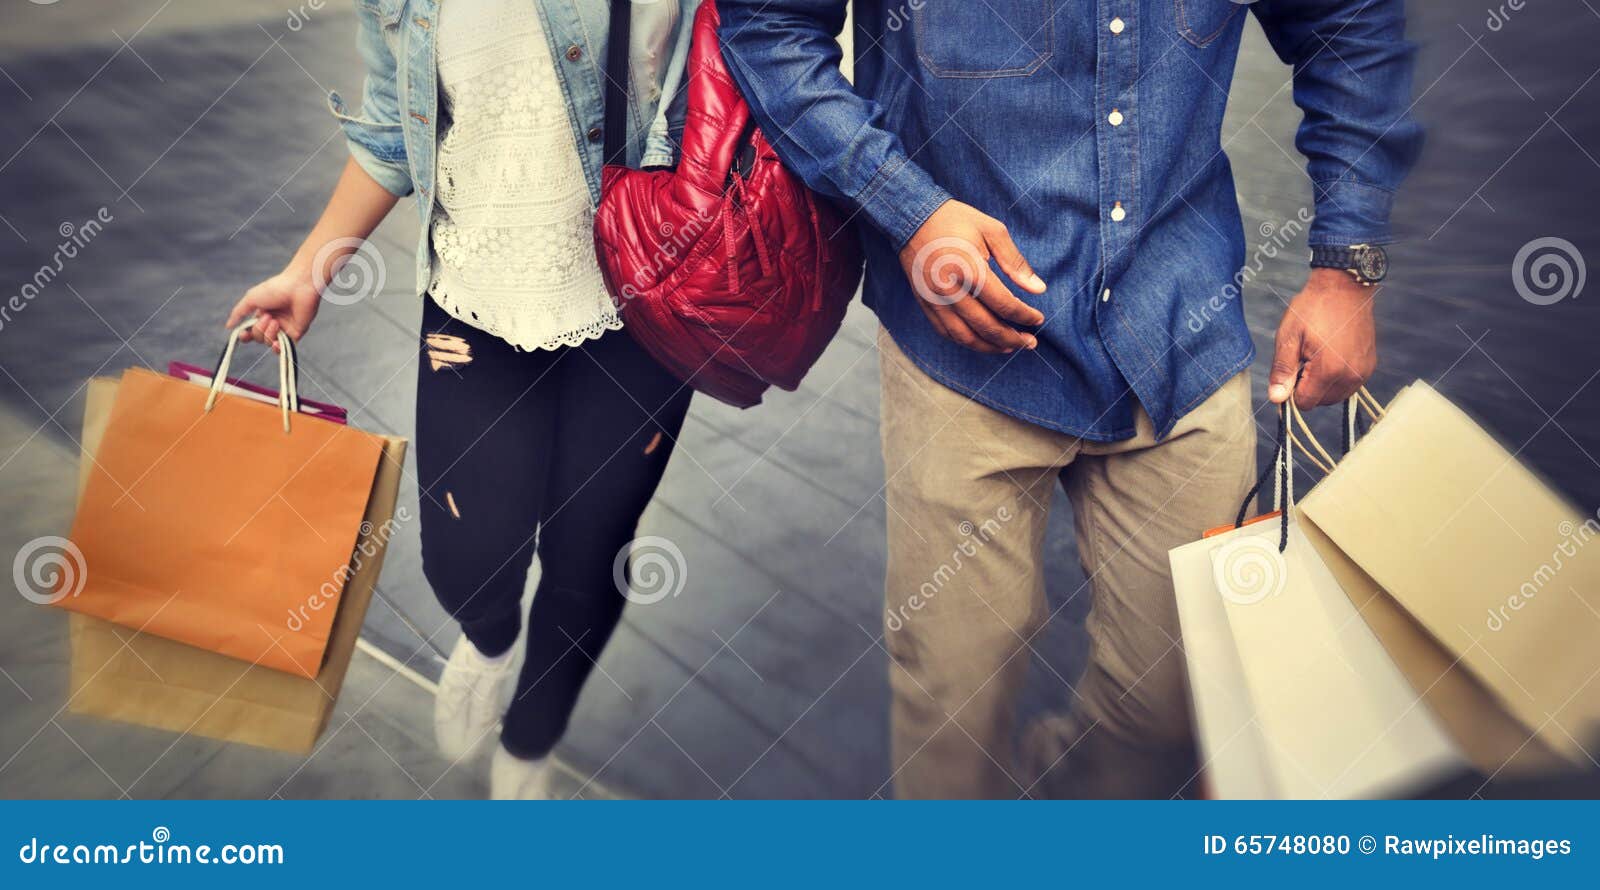 shopping couple capitalism enjoying romance spending concept